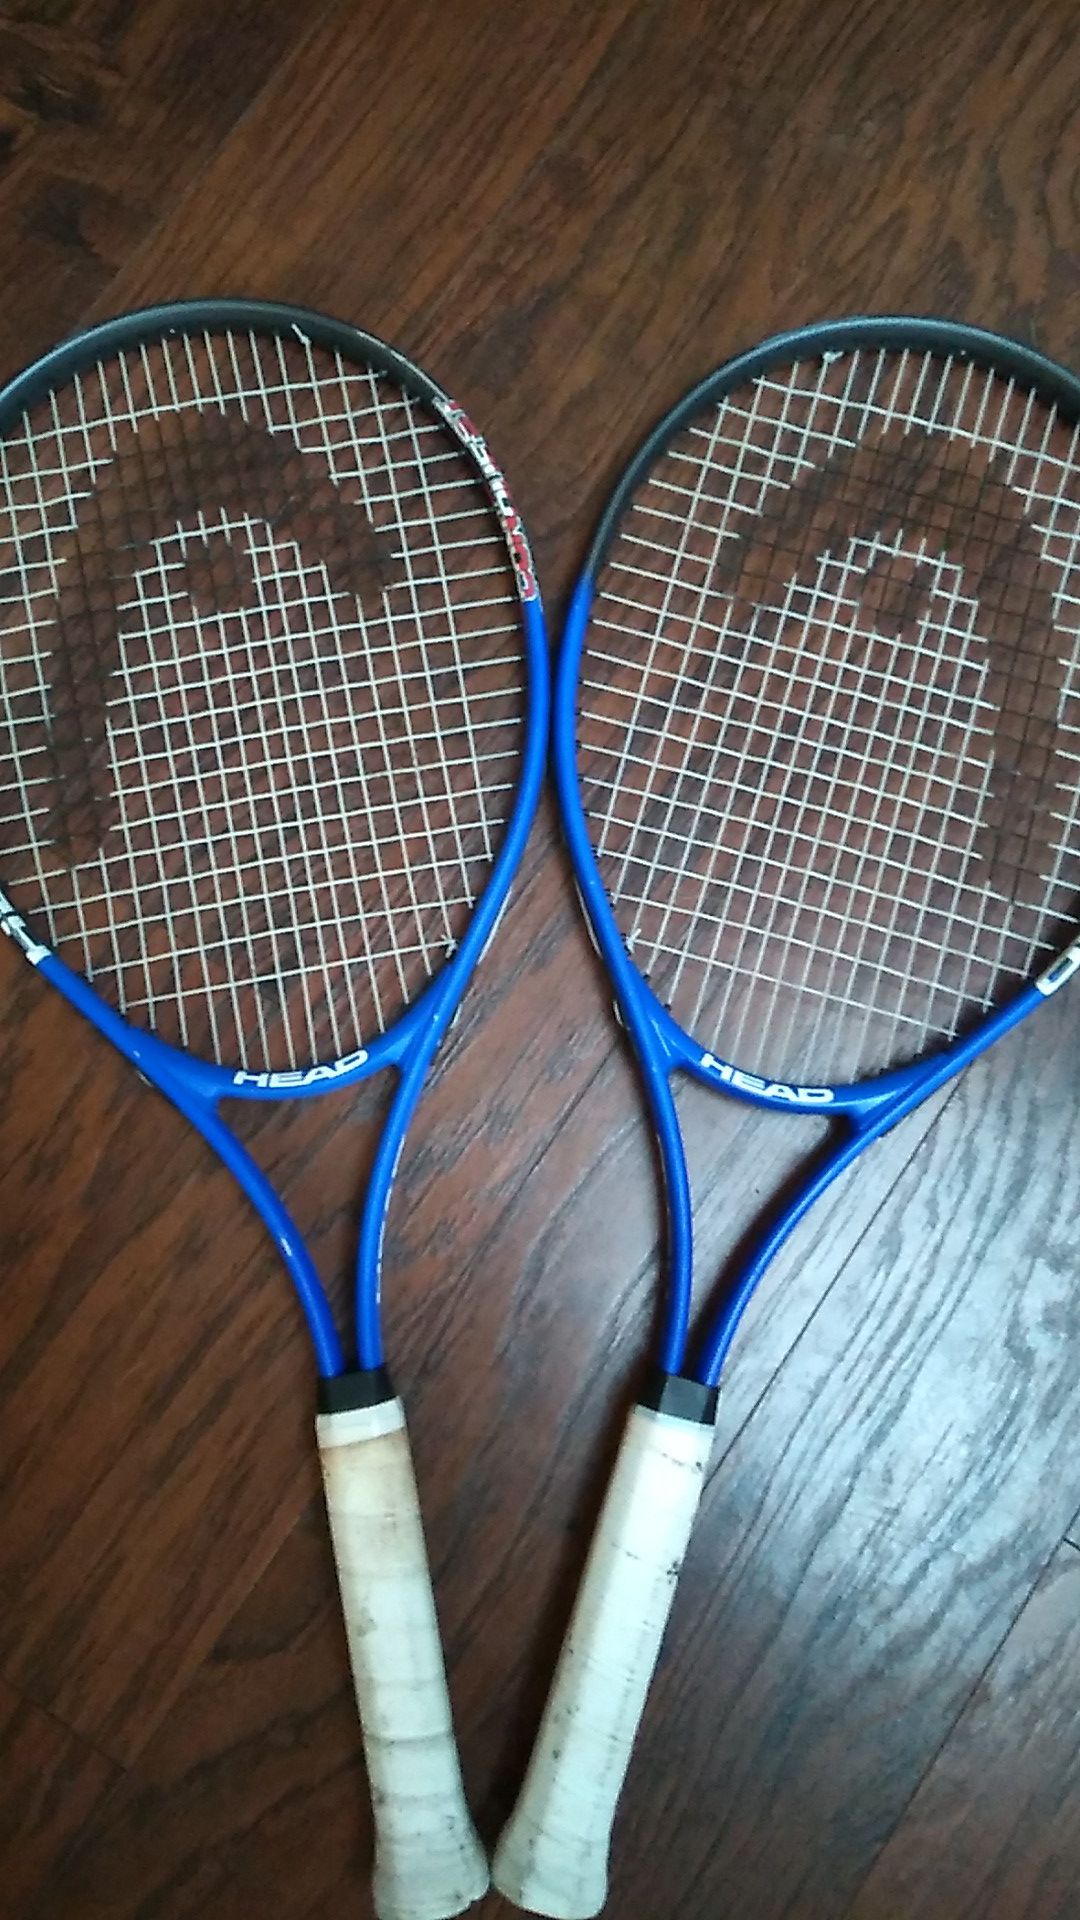 Head tennis rackets